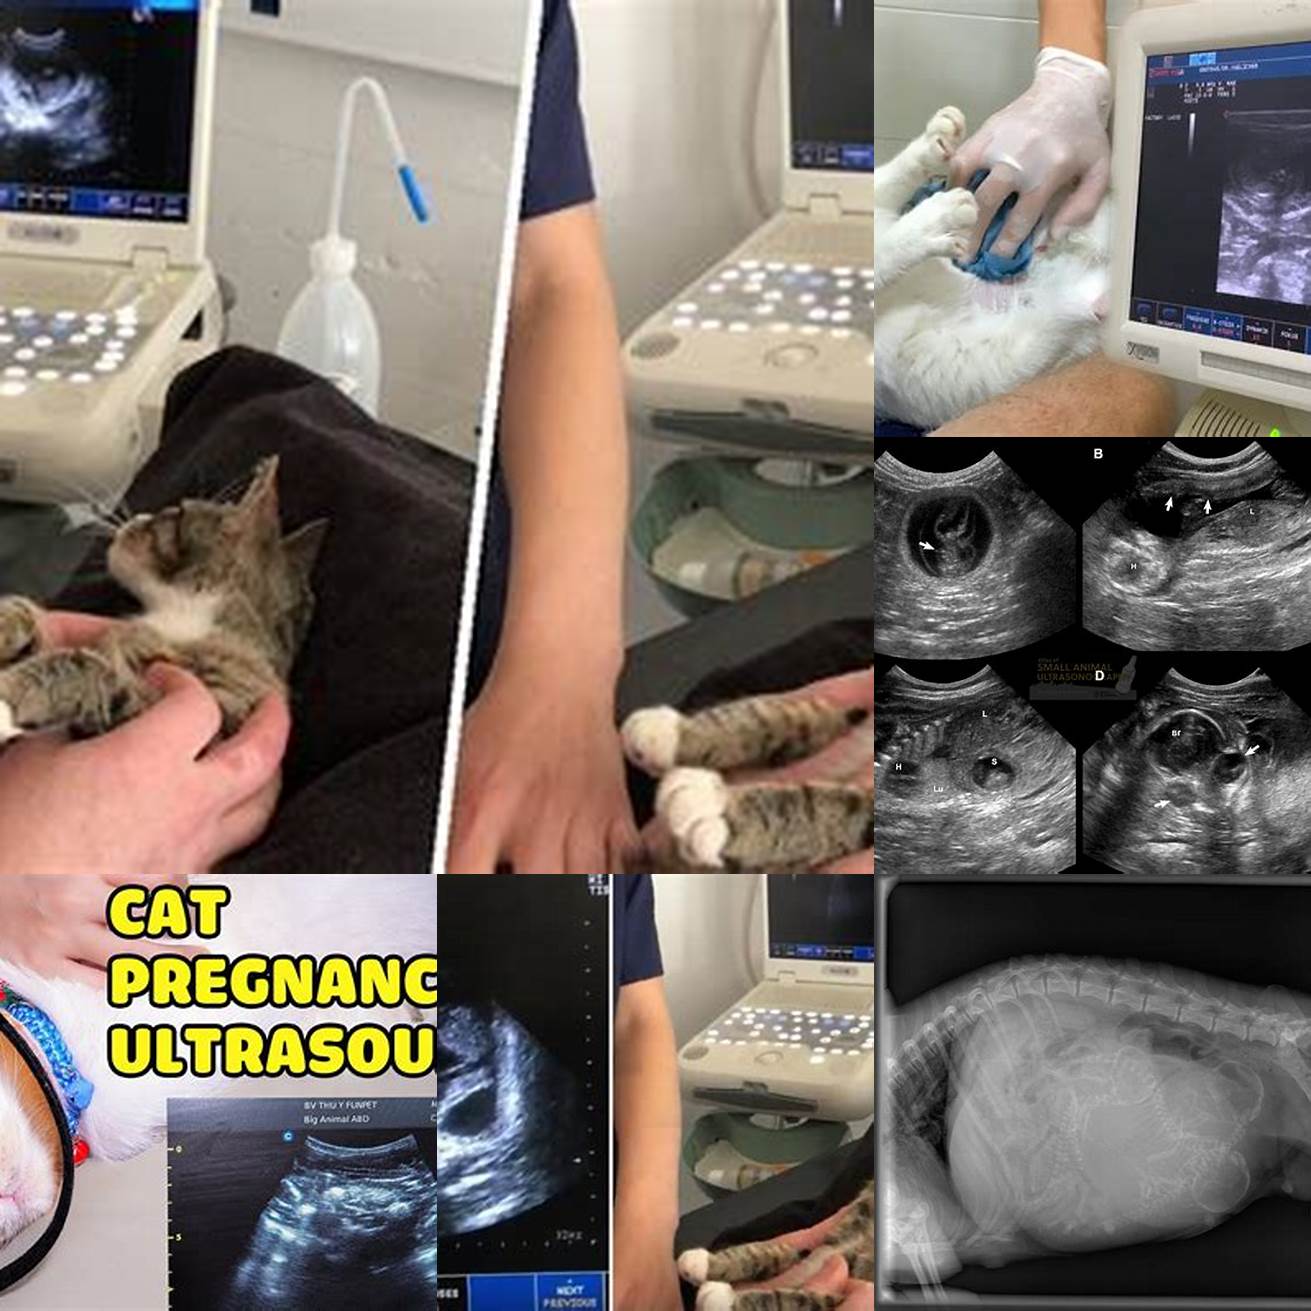 Pregnant cat ultrasound